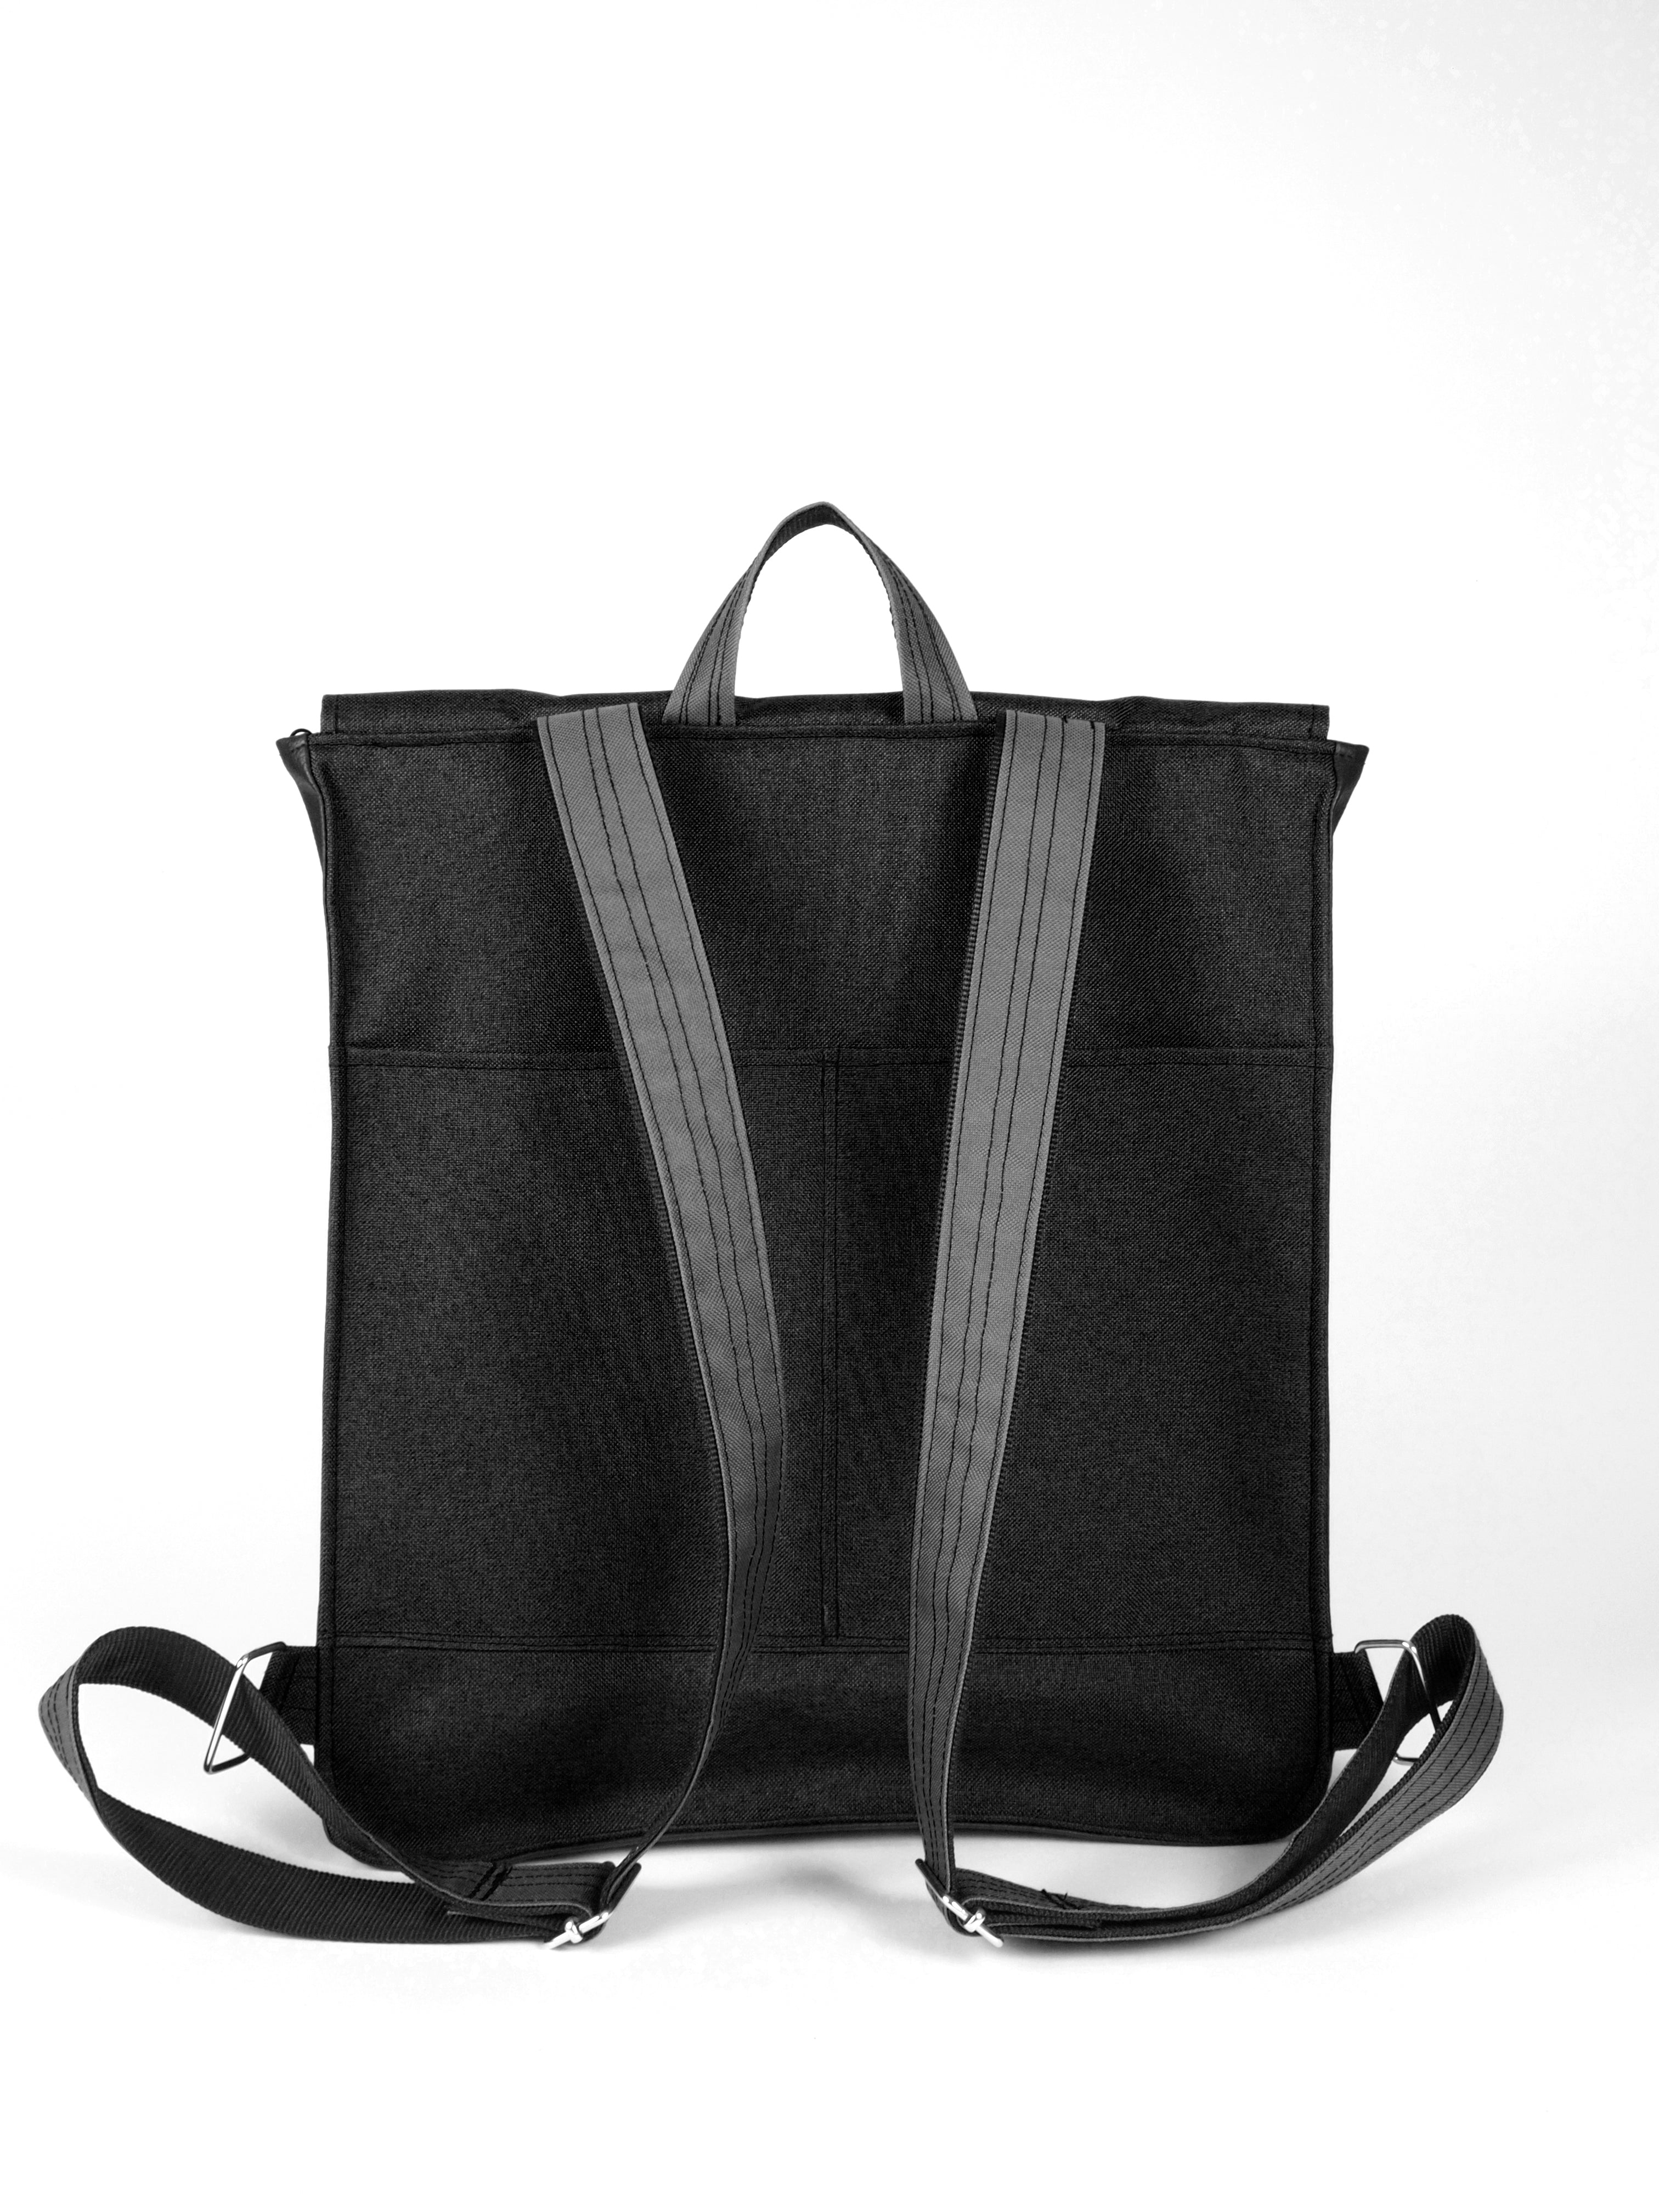 Bardo work backpack - black - Premium Bardo work backpack from BARDO ART WORKS - Just lvblue, dark blue, handemade, laptop backpack, unisex, vegan leather, water proof, work160! Shop now at BARDO ART WORKS